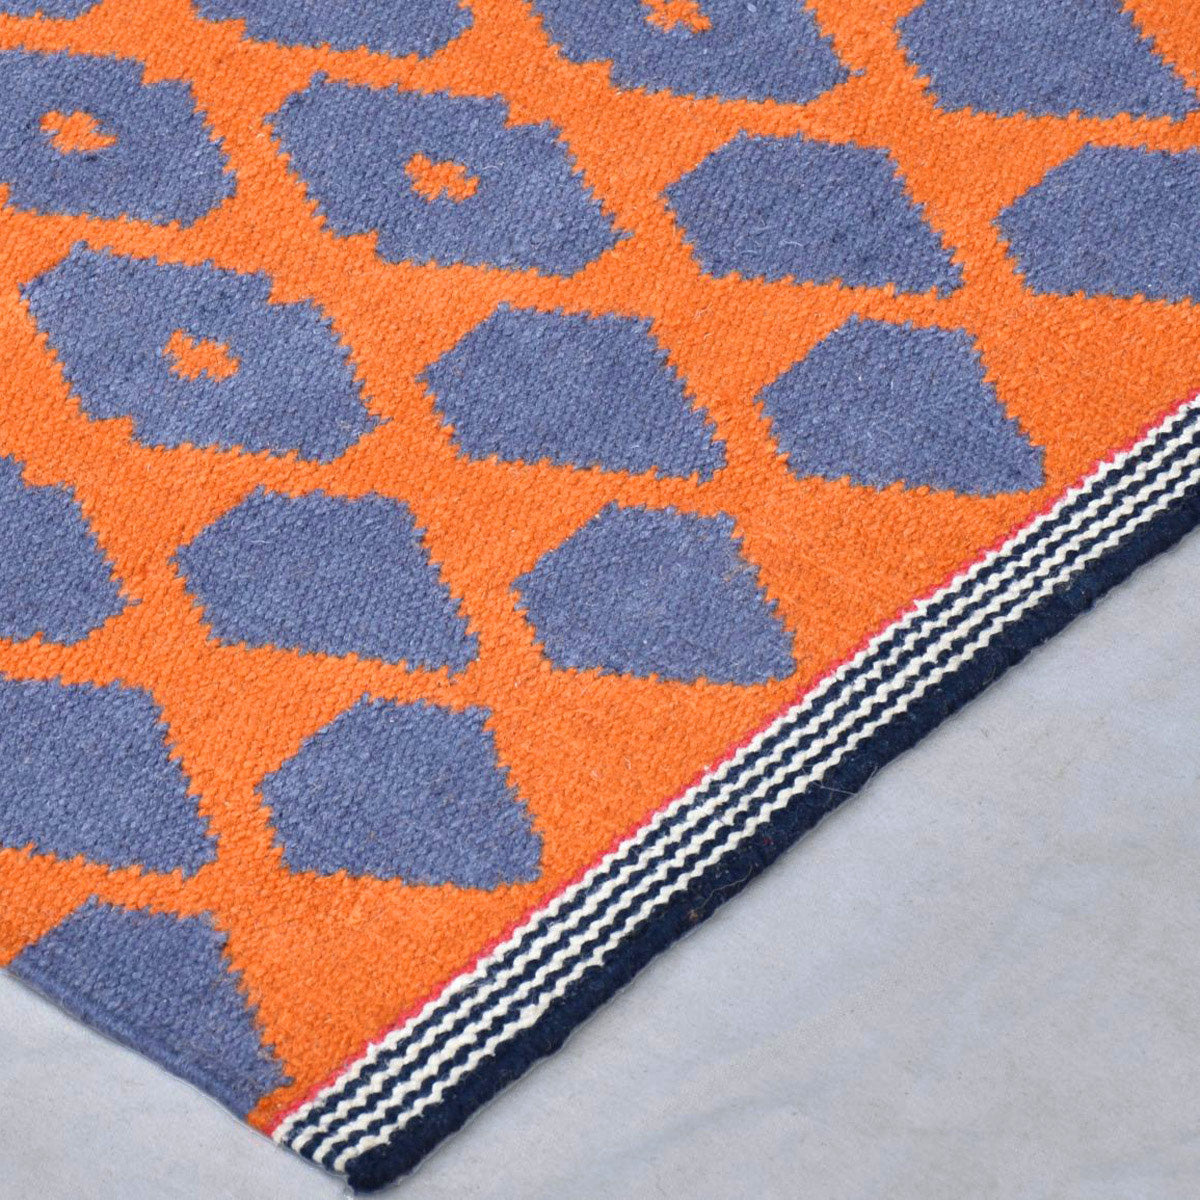 Geometric pattern, colourful rugs, designer rugs, luxury rugs, wool rugs, geometric rug, modern rug, orange rug, red rug